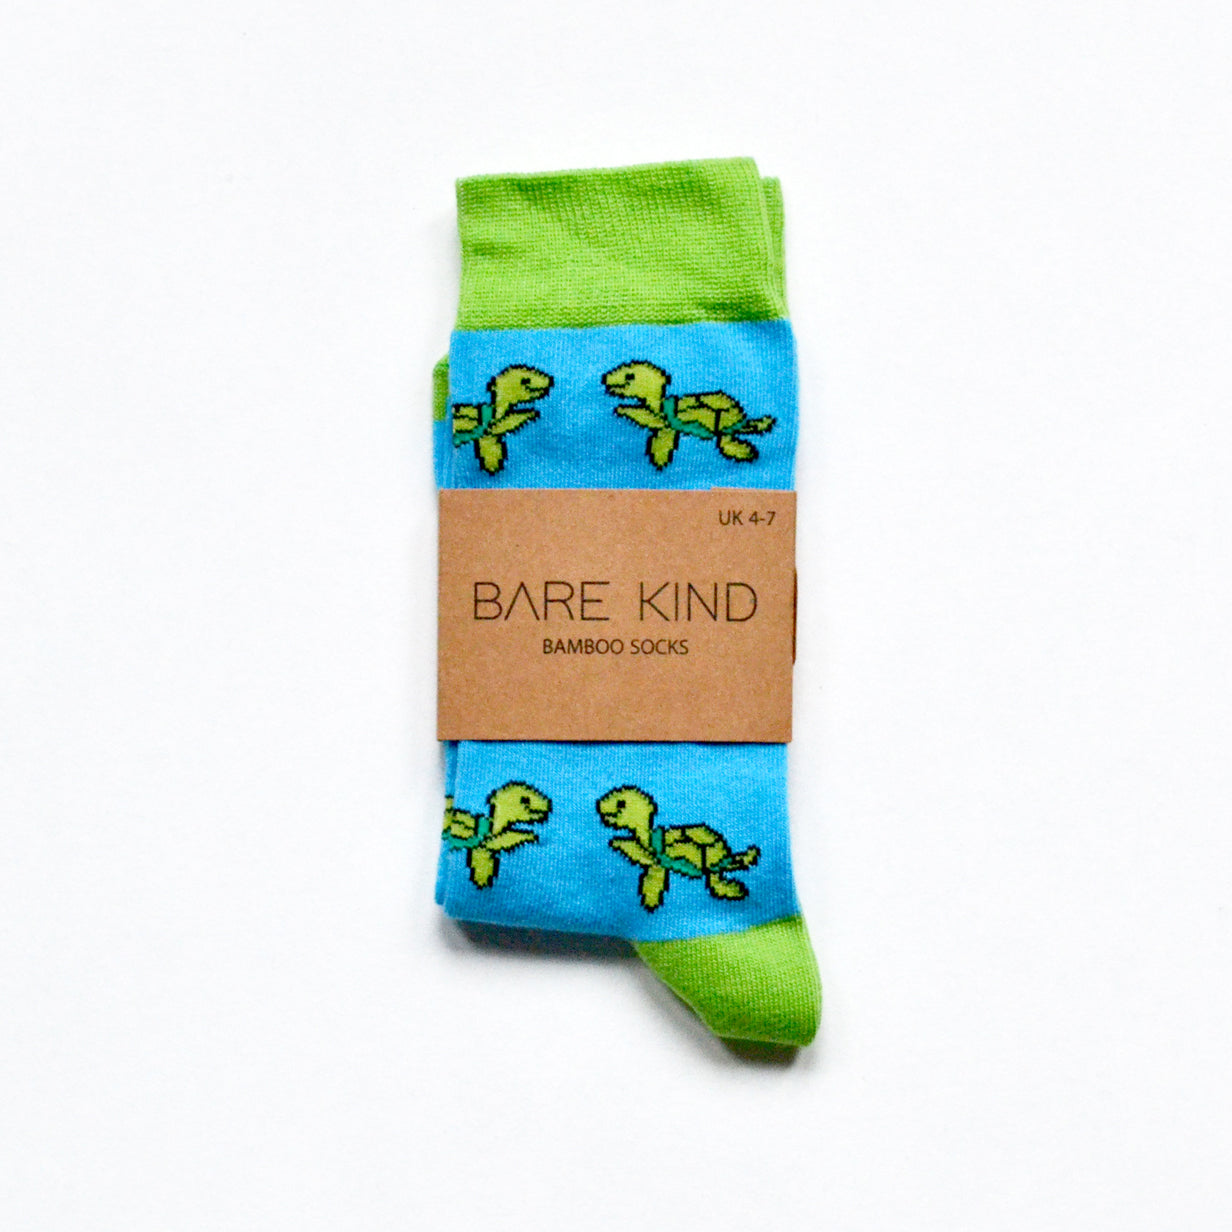 Bare Kind Bamboo Socks - Save the Turtles